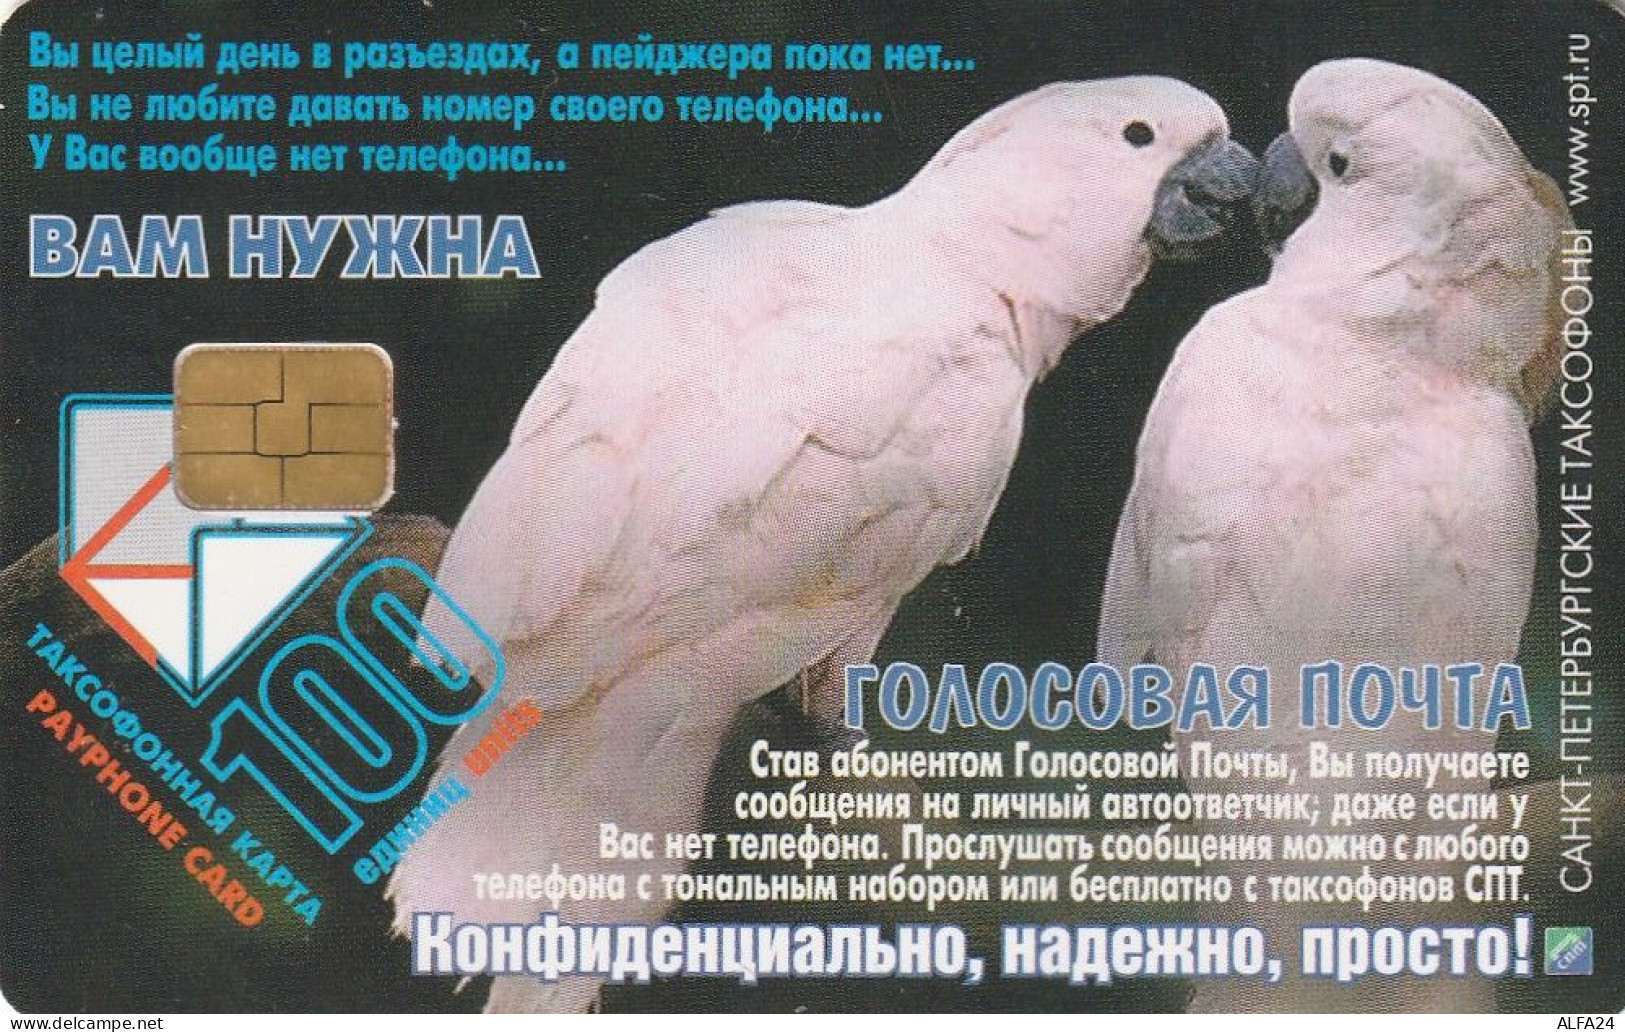 PHONE CARD RUSSIA Sankt Petersburg Taxophones (E111.23.1 - Russia